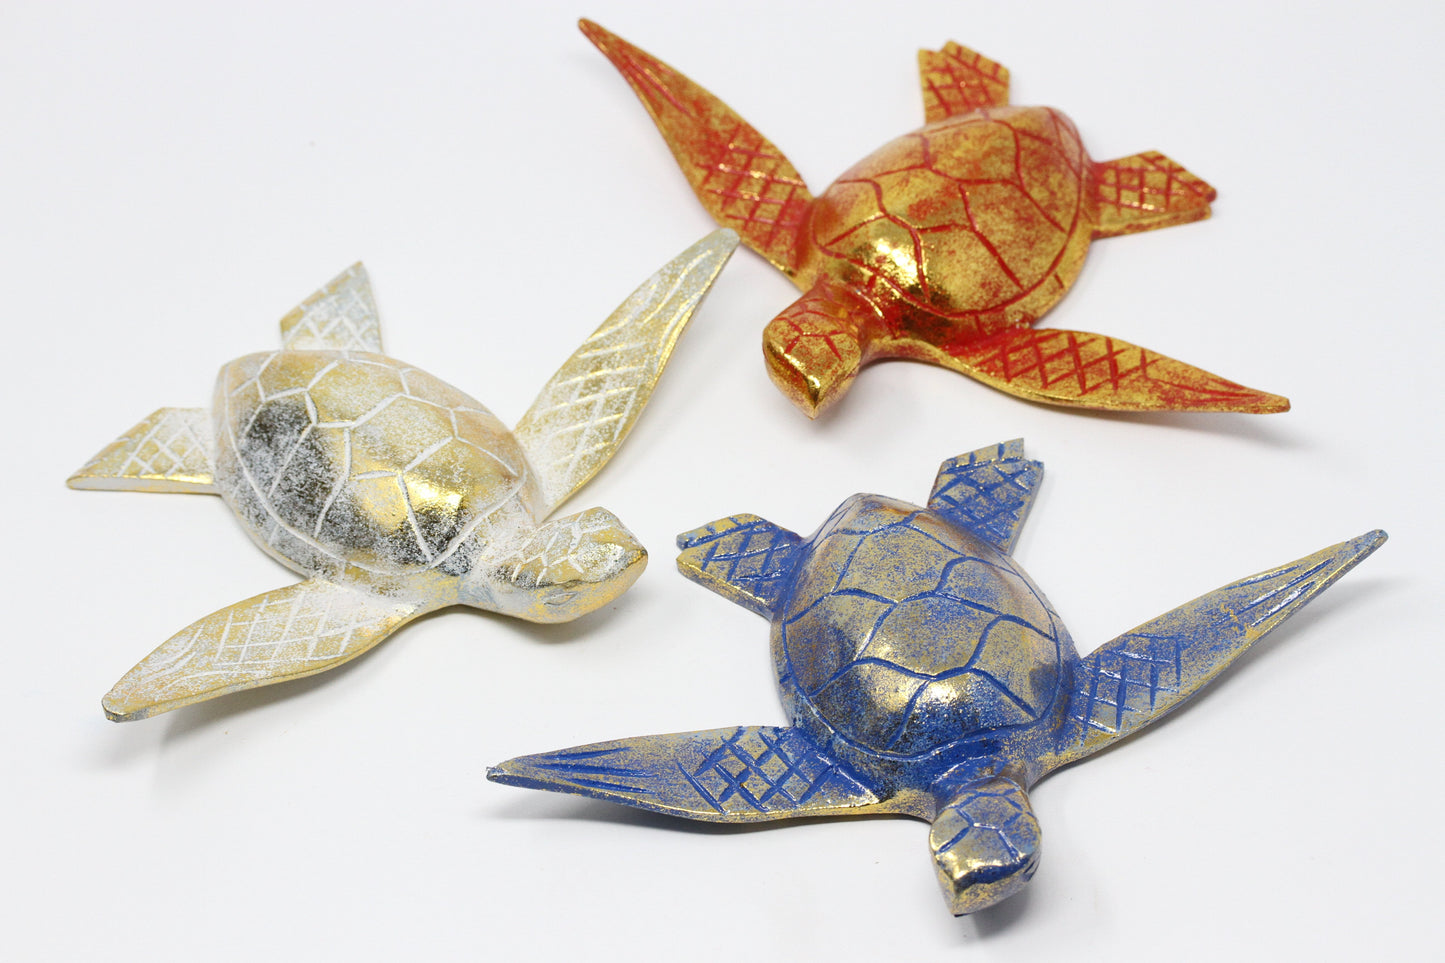 Colorful Sea Turtles